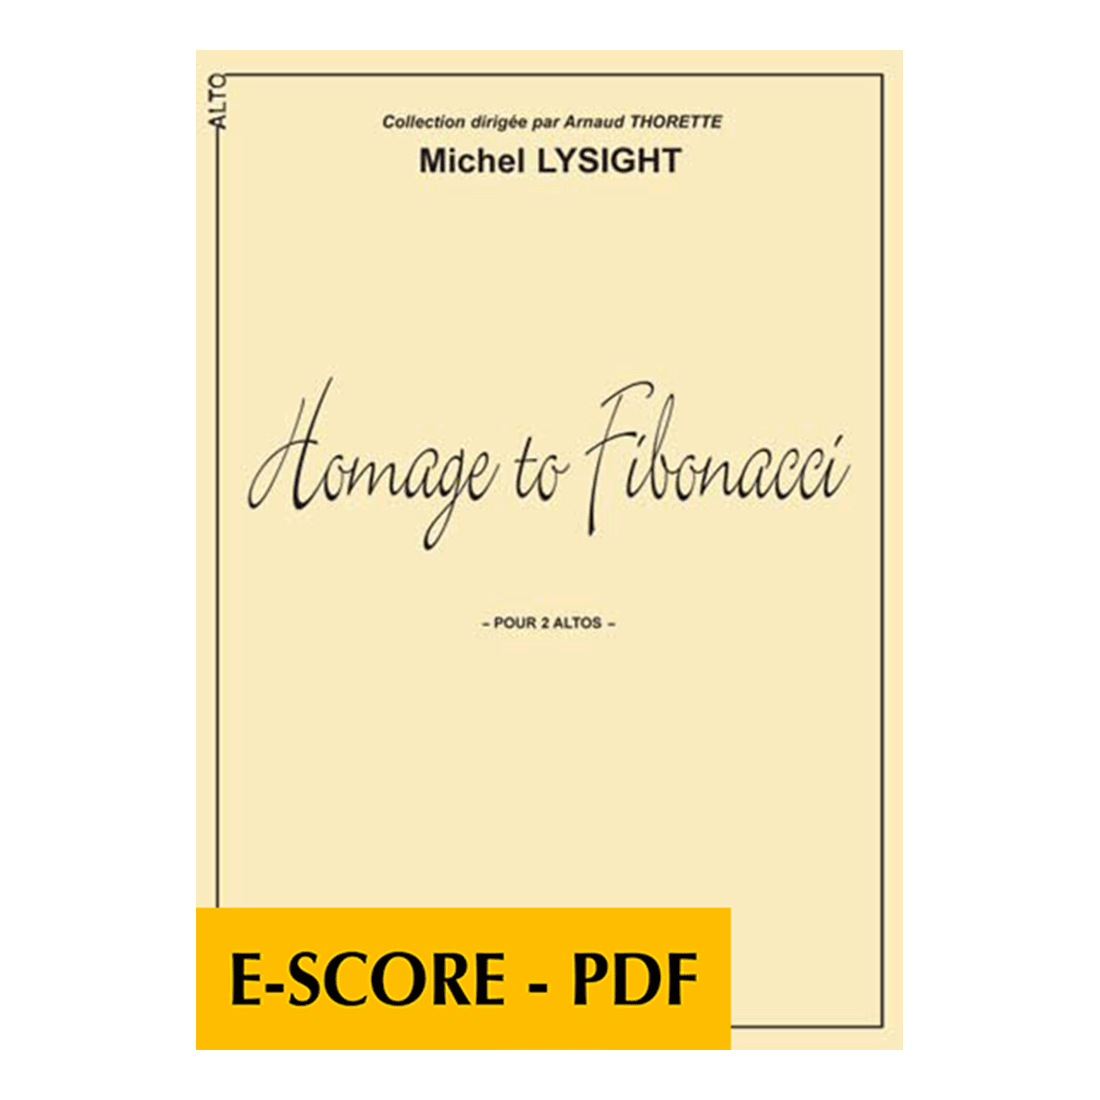 Homage to Fibonacci (version 2 violas) - E-score PDF